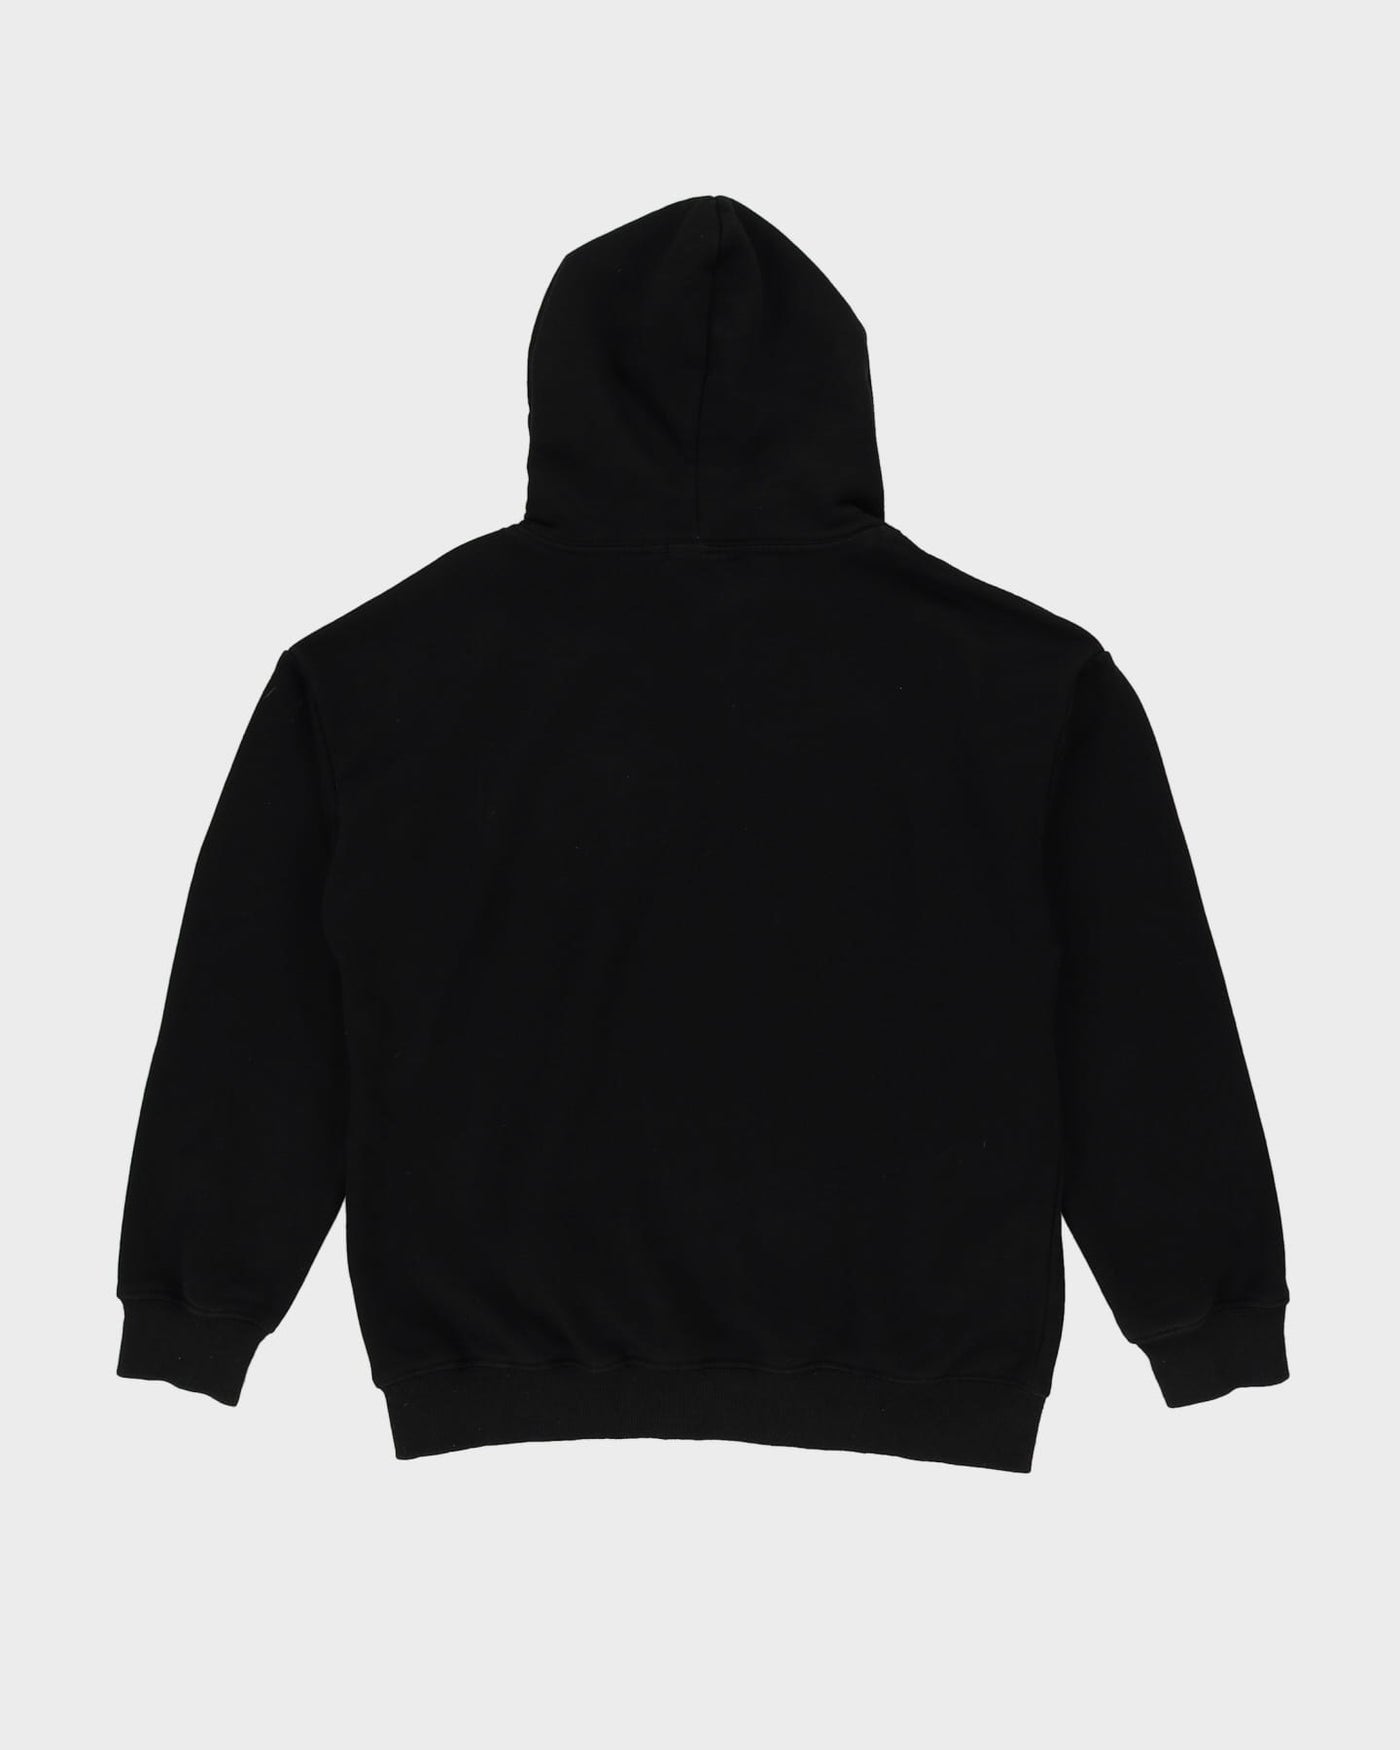 Carhartt Black Embroidered Logo Hoodie - XL